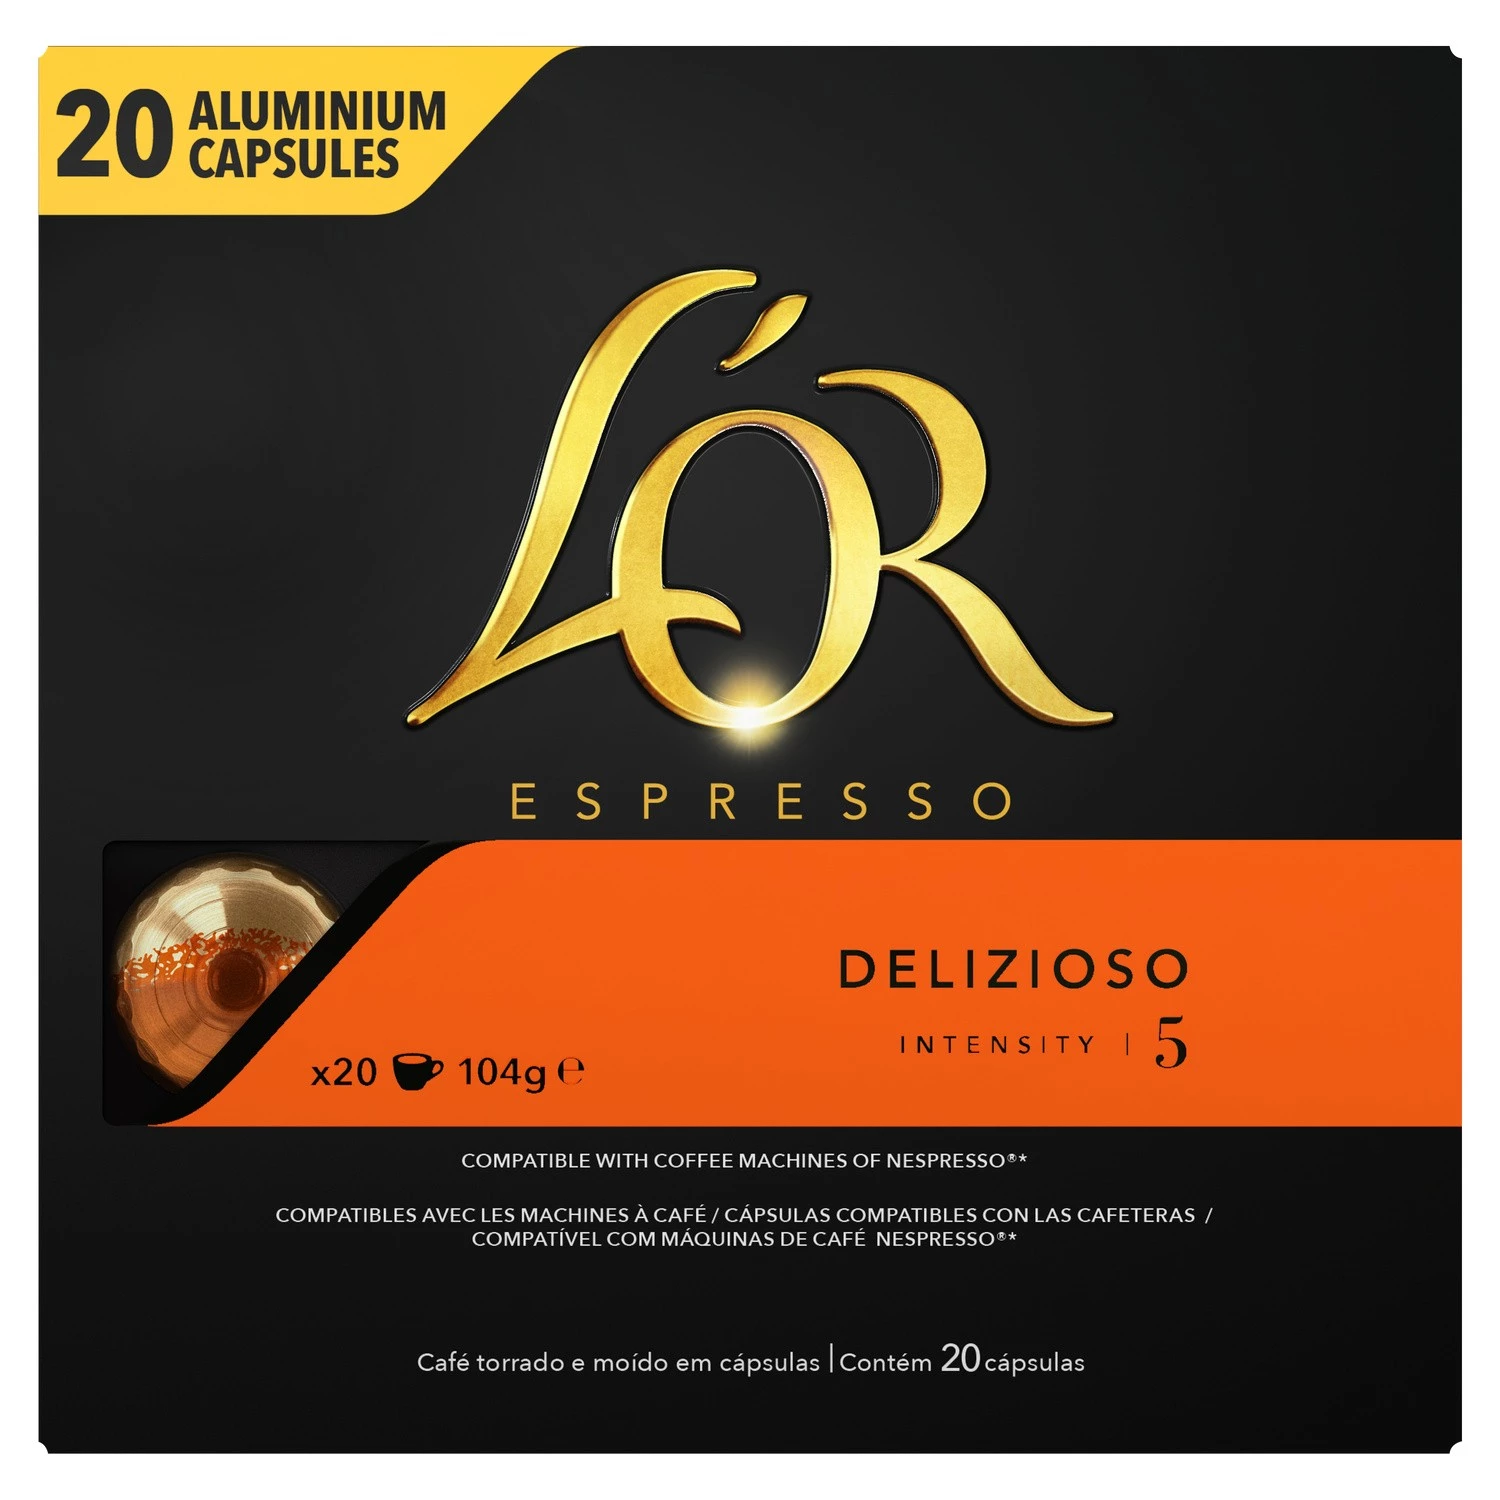 Café Délizioso X20 Capsules Aluminium 104g - L'OR